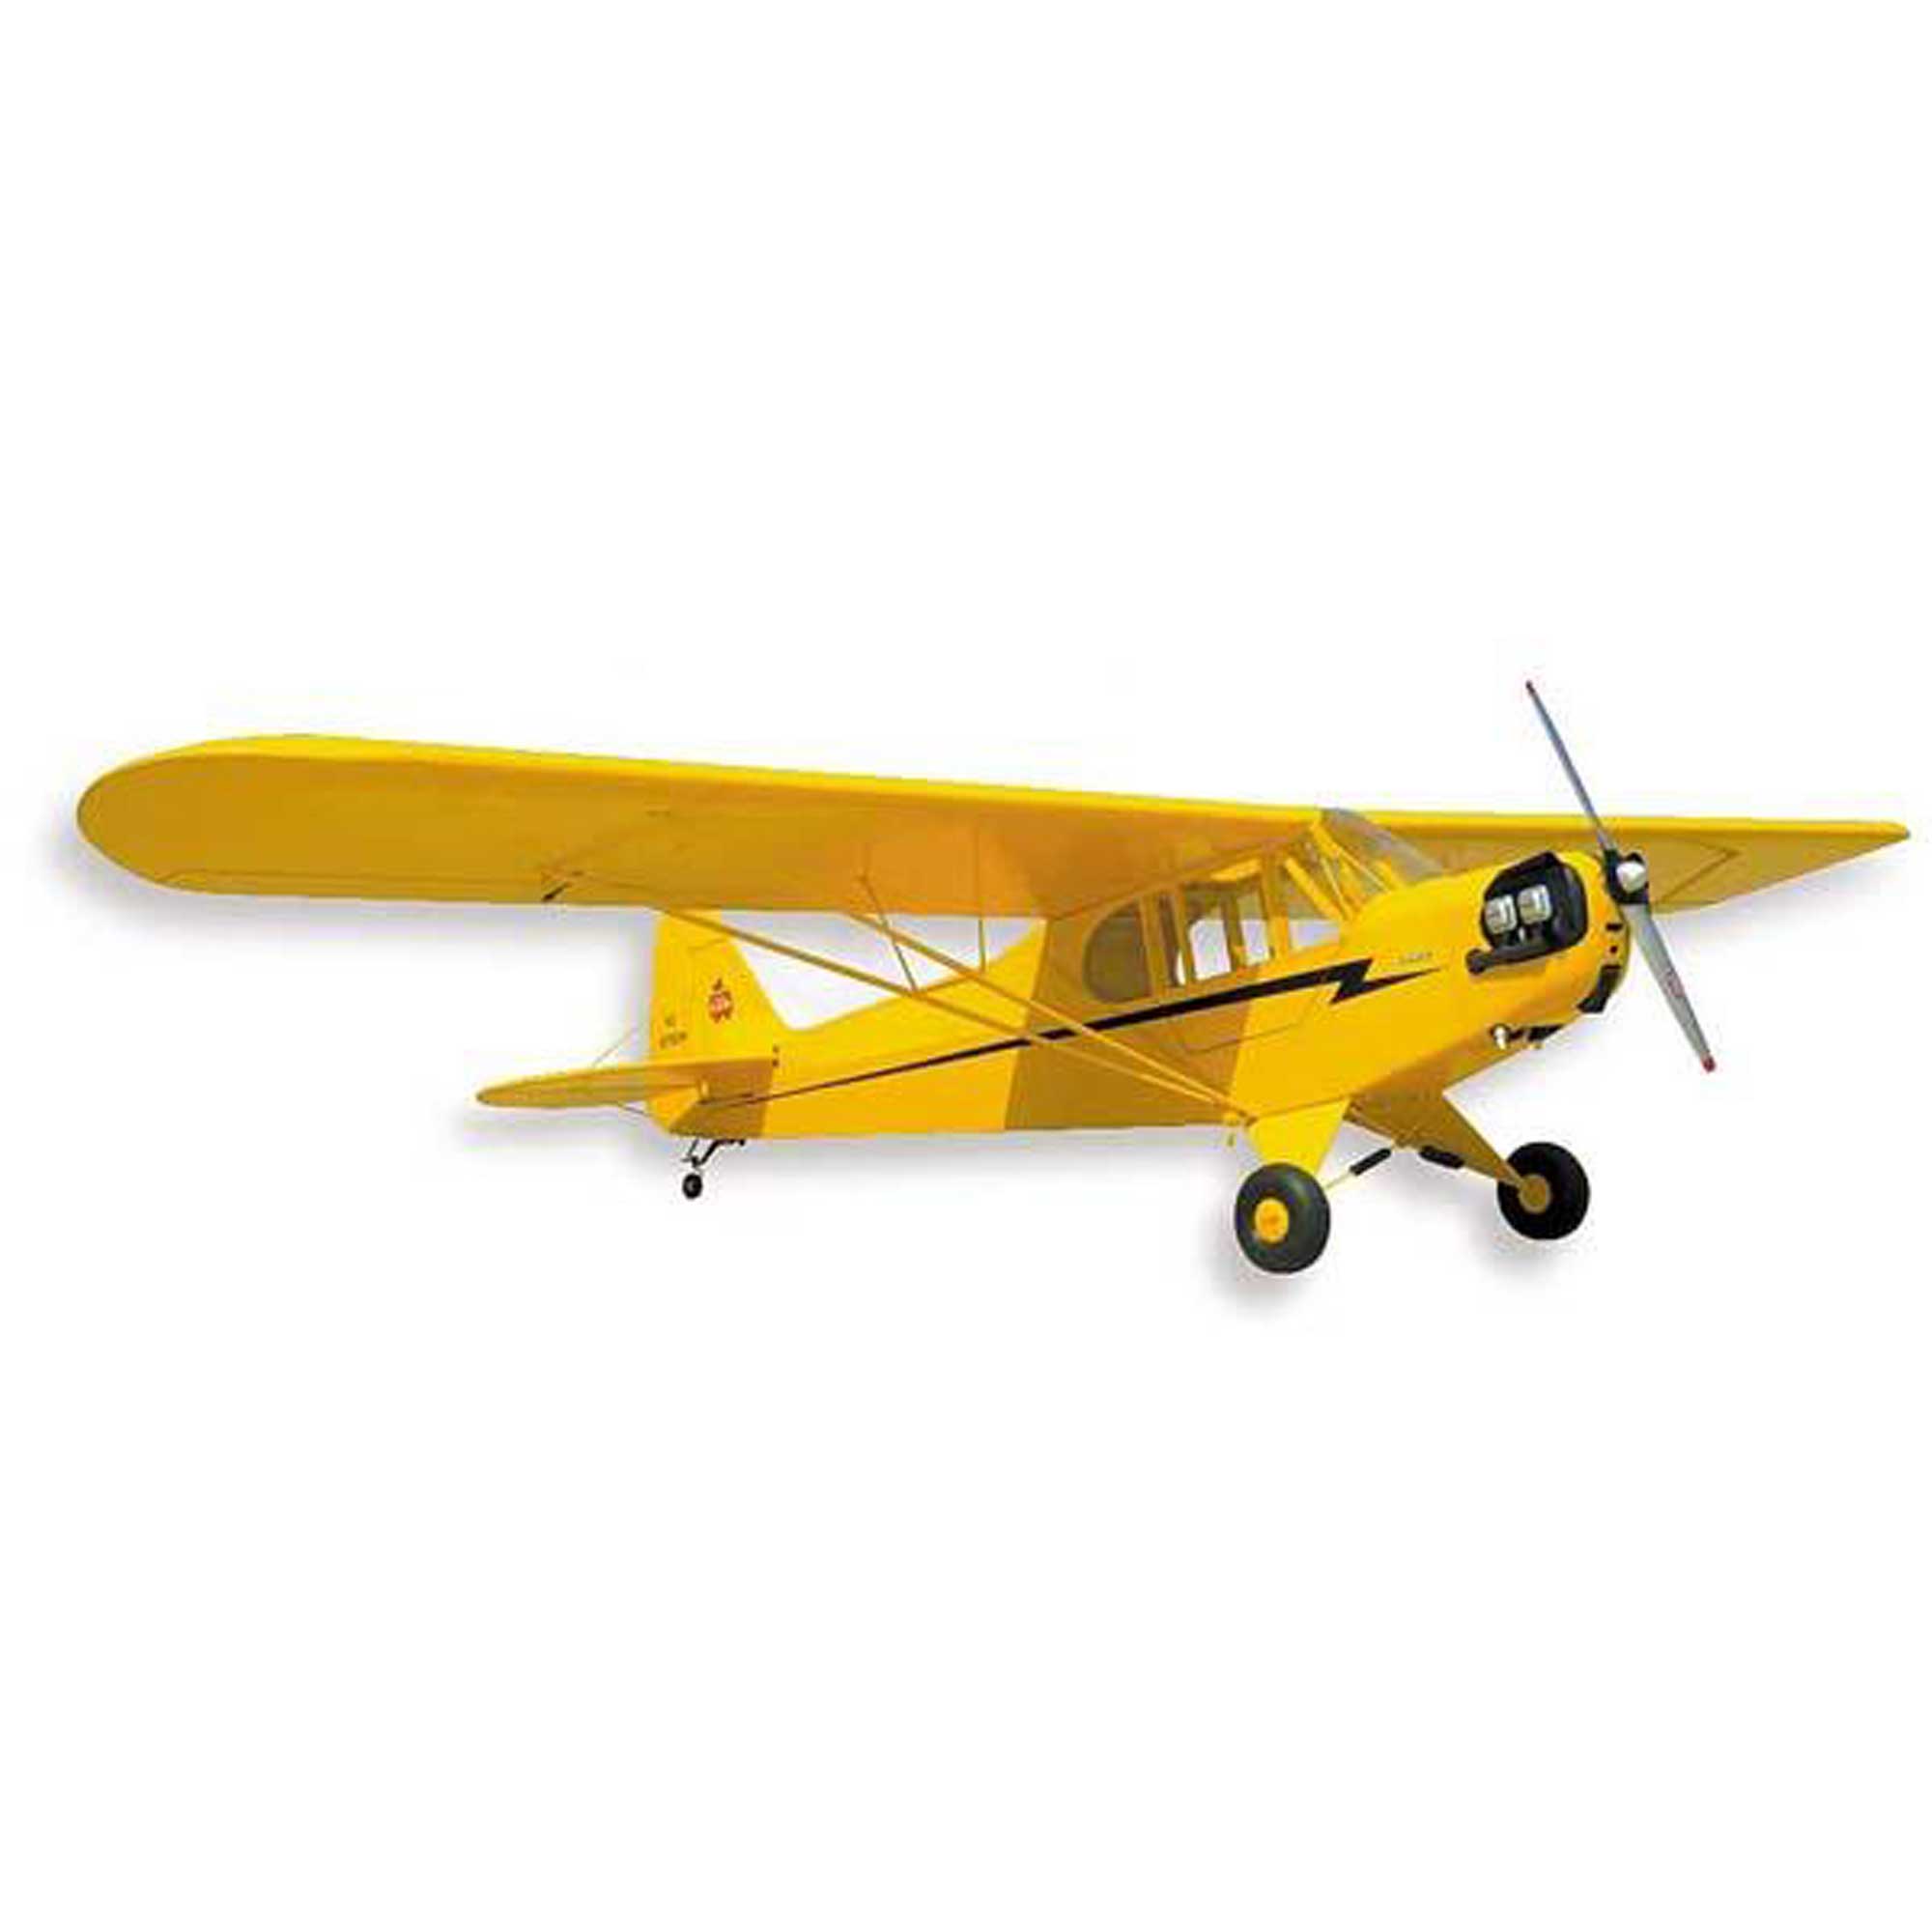 Piper J-3 Cub #201 Herr Balsa Wood Model Airplane Kit Rubber Powered 